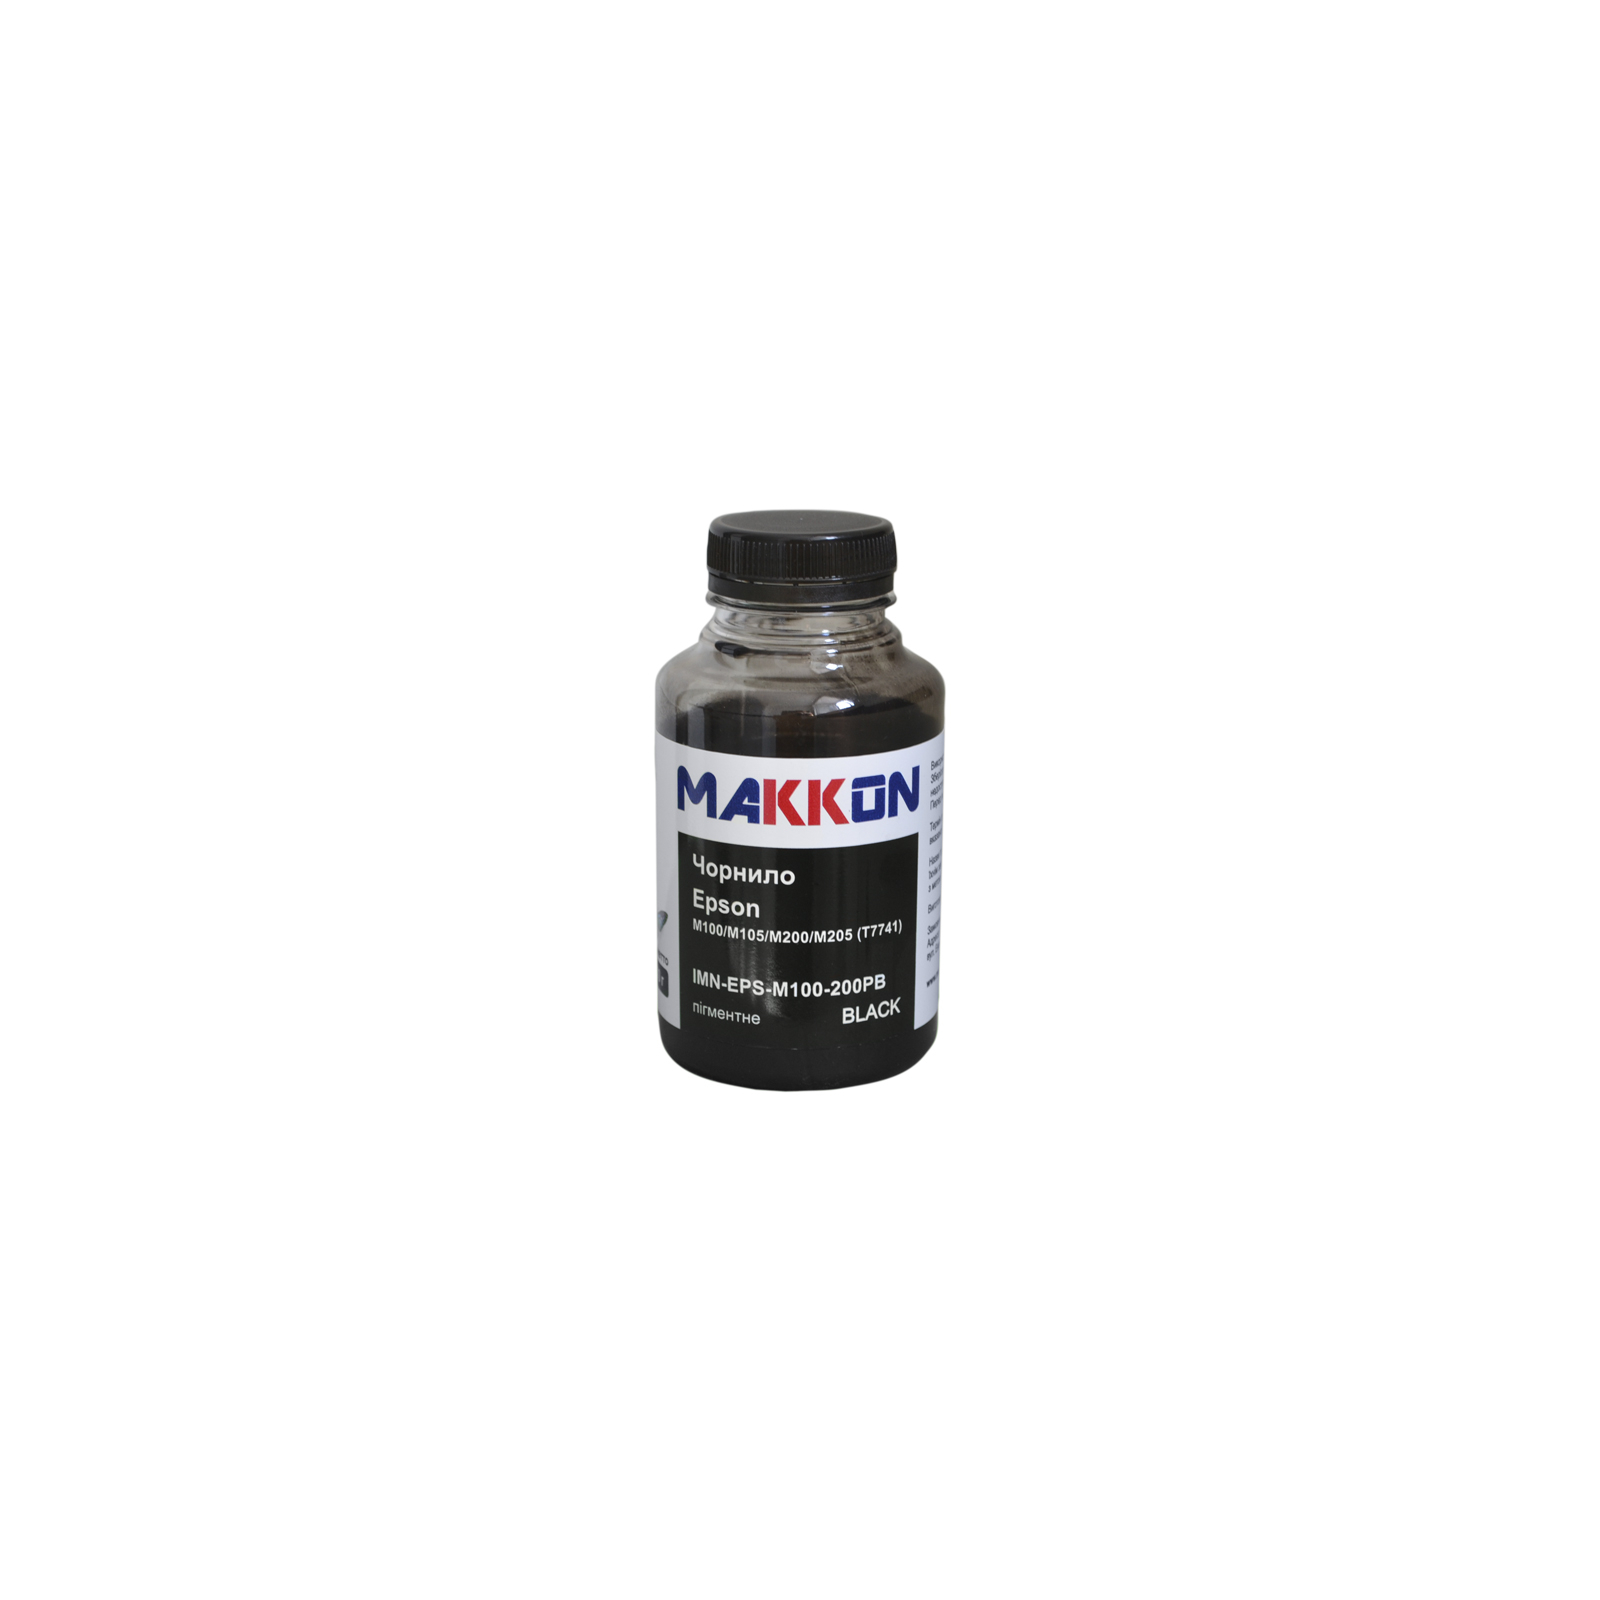 Чернила Makkon Epson M100/M105/M200/M205 (T77414) 200г pigmented black (IMN-EPS-M100-200PB)